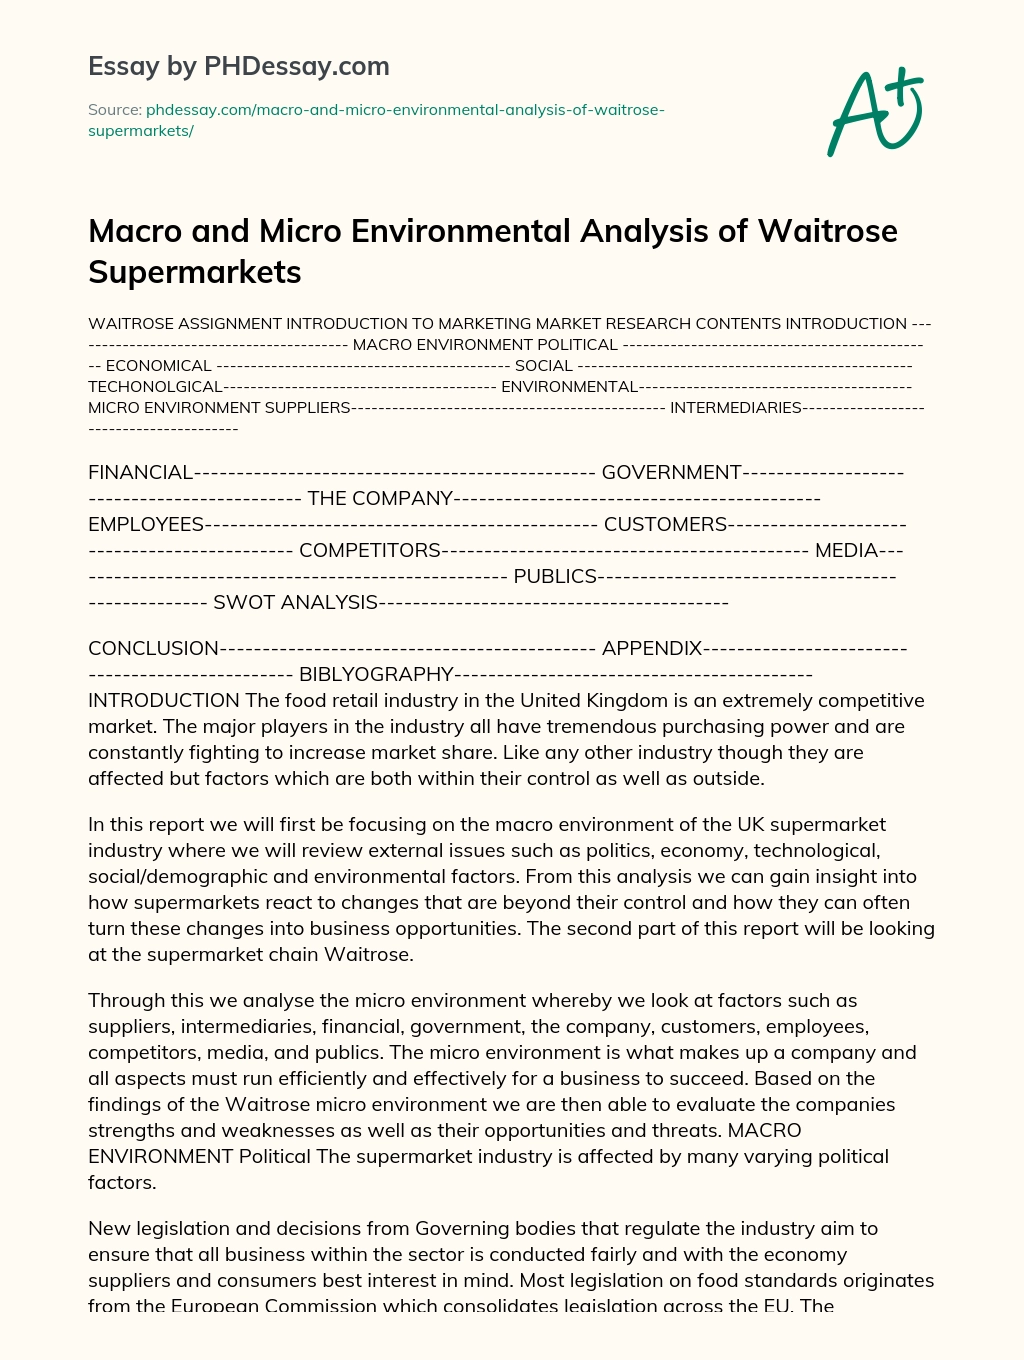 Macro and Micro Environmental Analysis of Waitrose Supermarkets essay